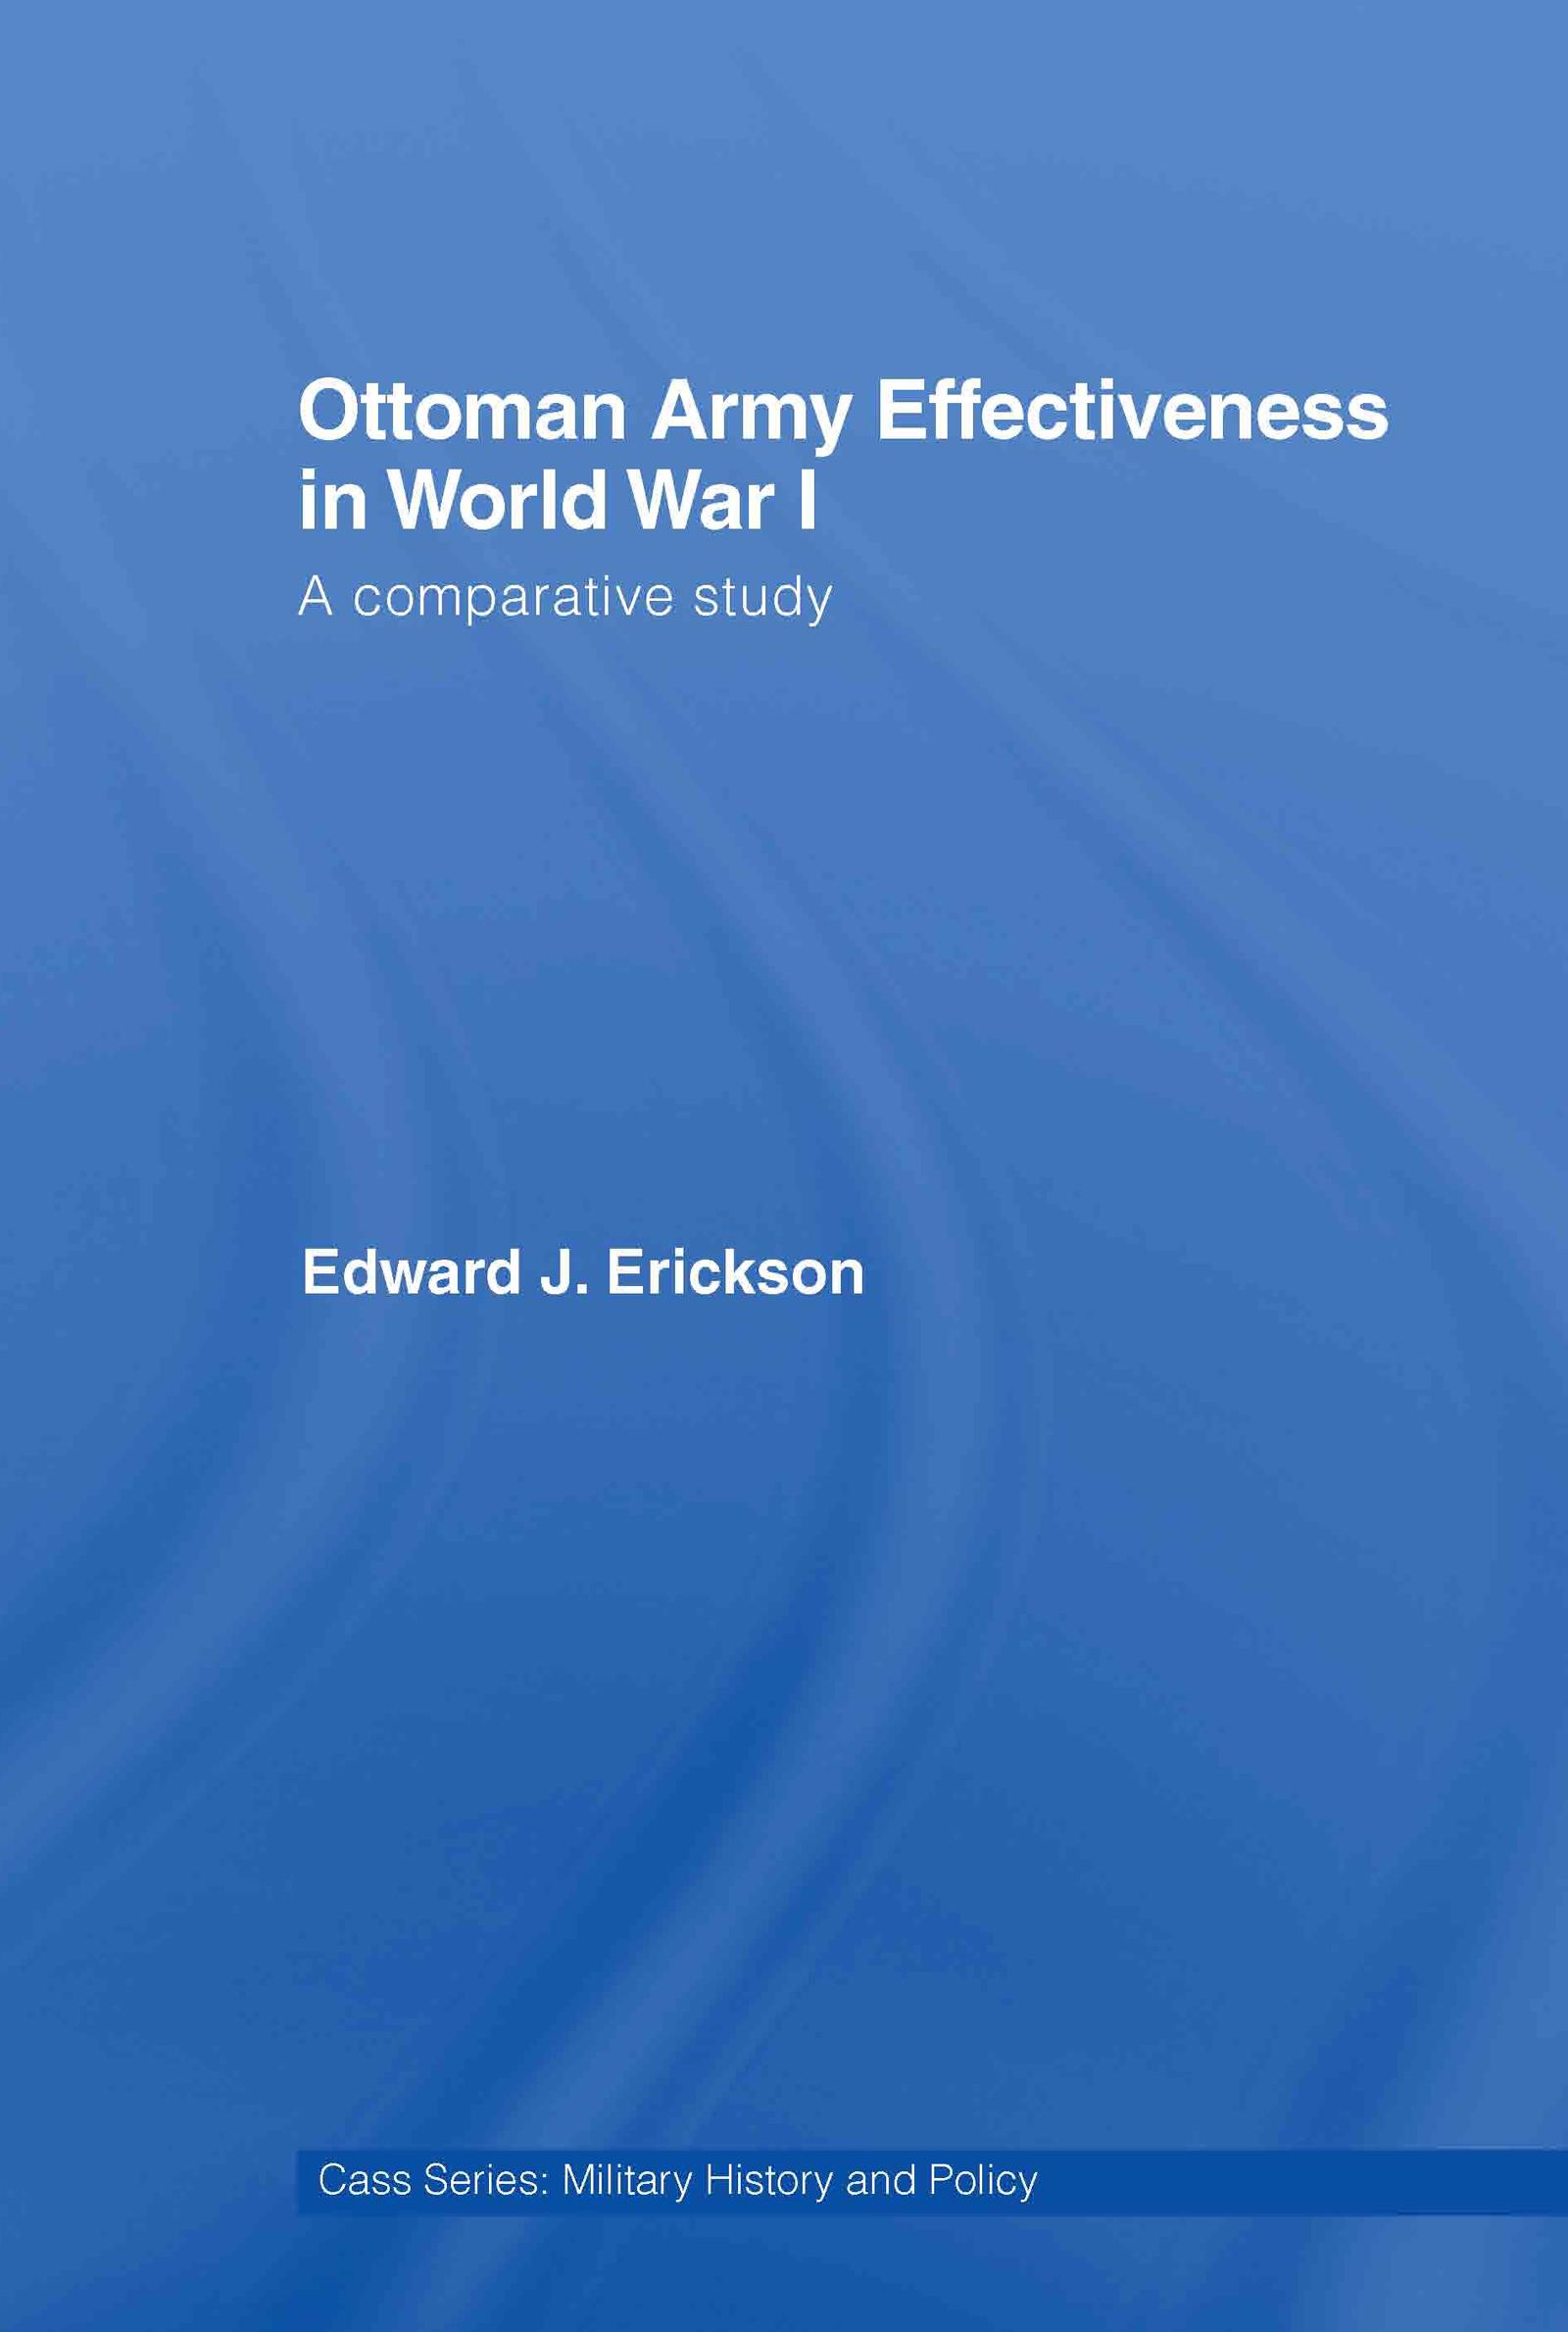 Erickson, E: Ottoman Army Effectiveness in World War I - Edward J. Erickson (University of Leeds, UK)